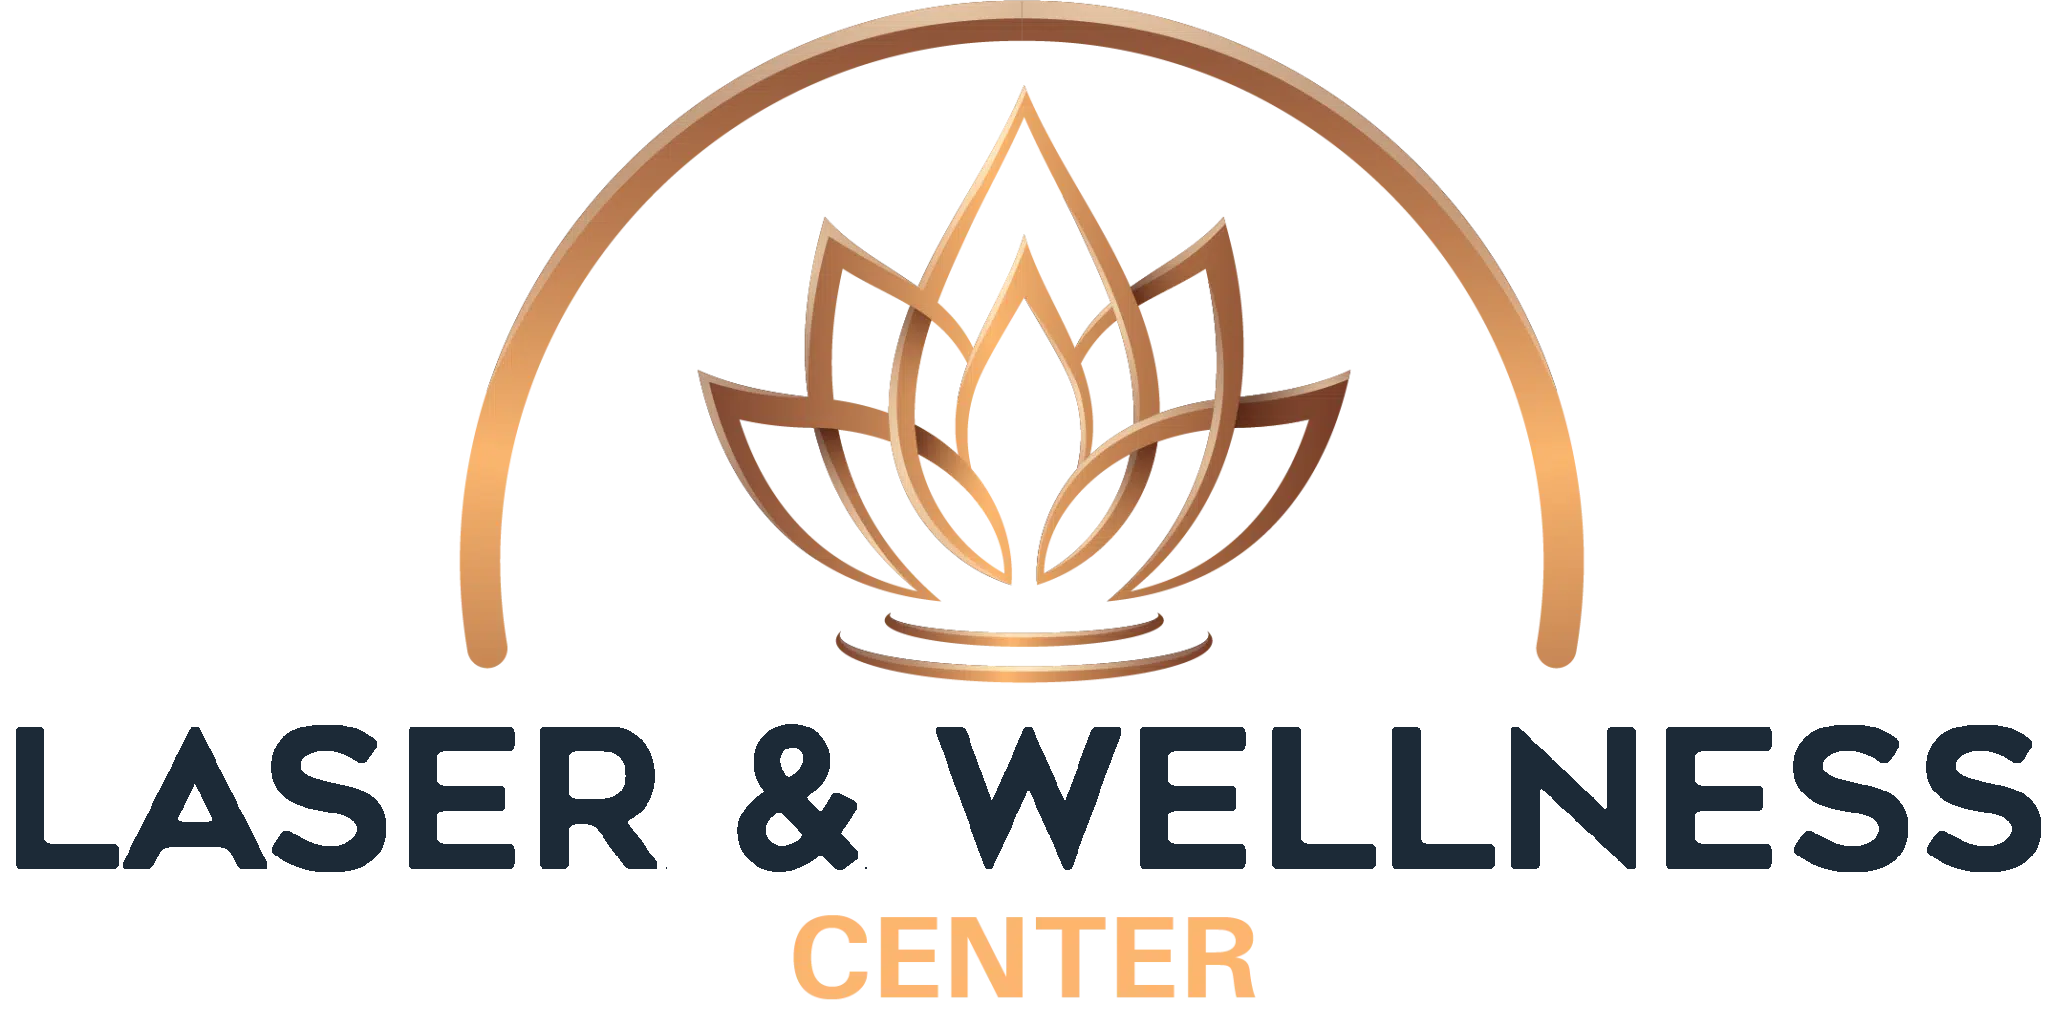 Laser & Wellness Center - Complete Skin Care and Rejuvenation Treatment Services